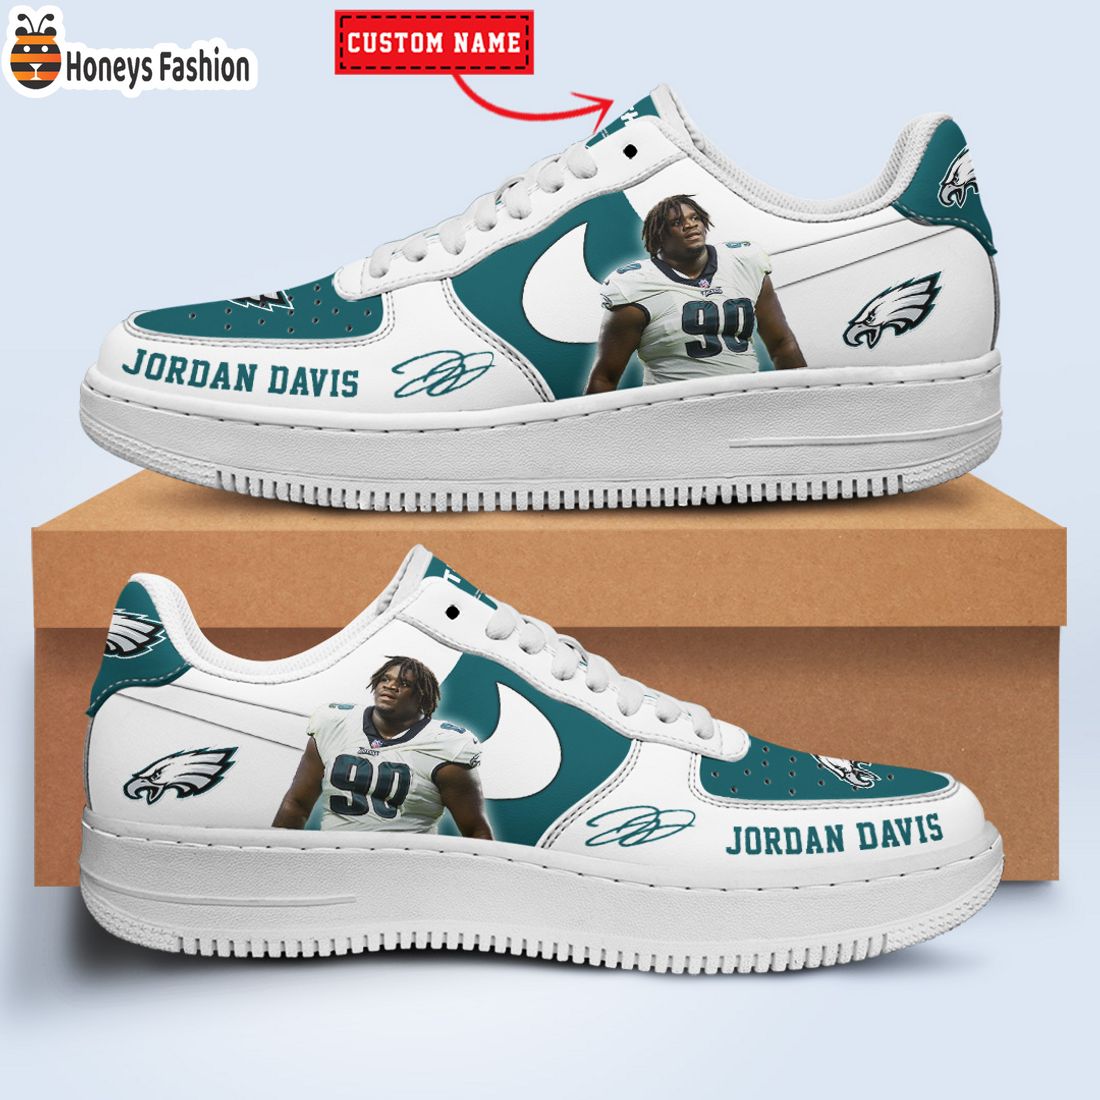 TOP SELLER Jordan Davis Philadelphia Eagles NFL Custom Name Nike Air Force Shoes